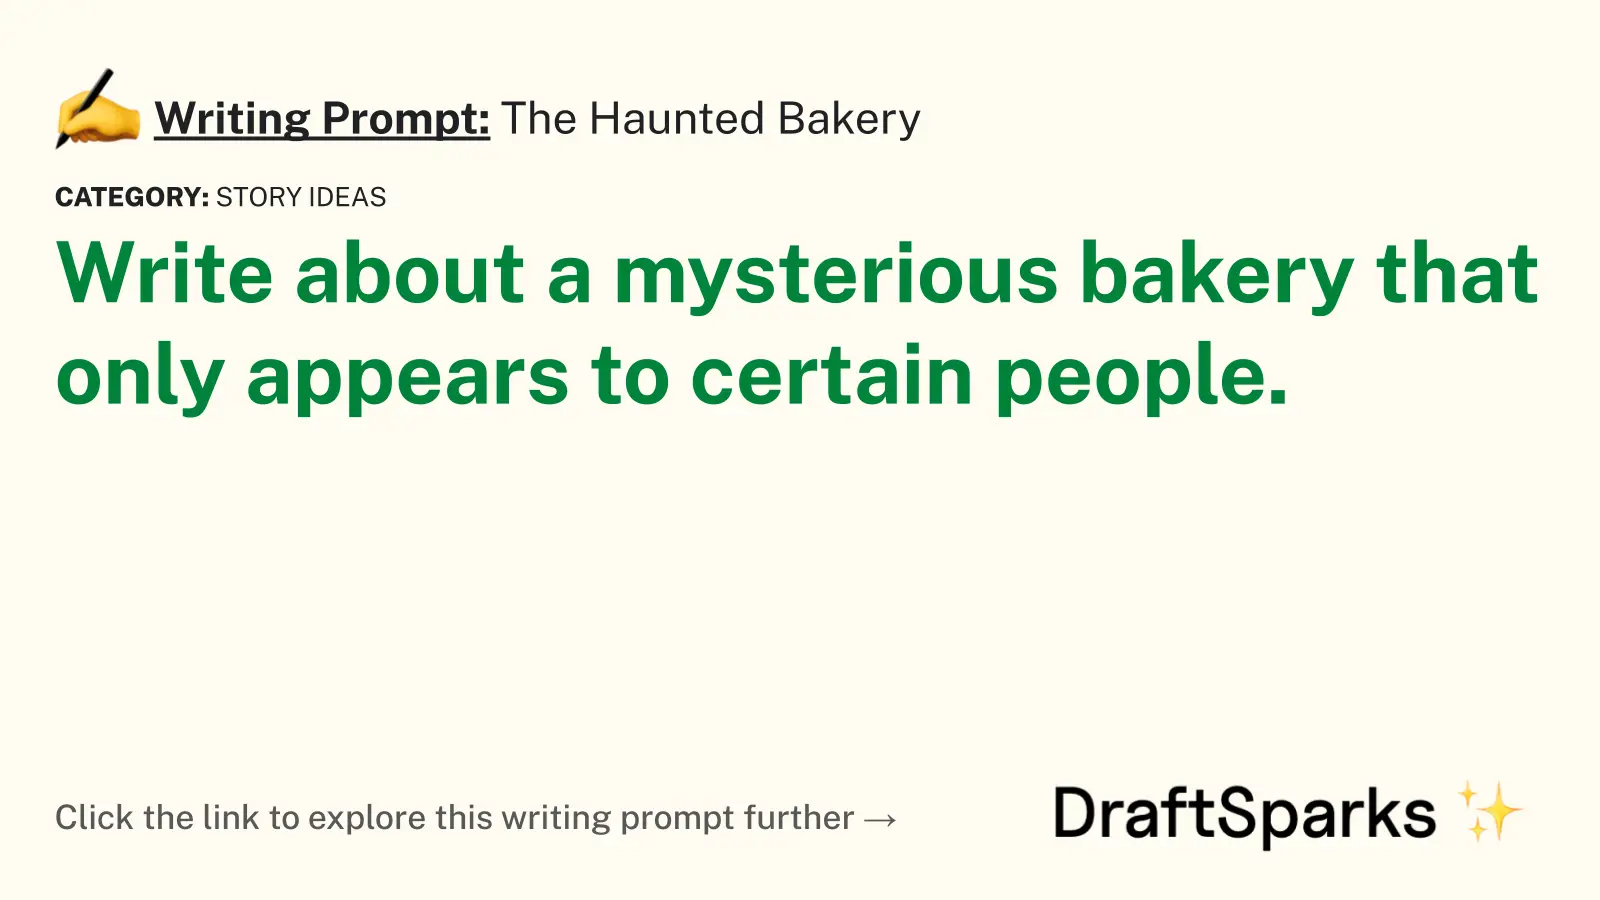 The Haunted Bakery